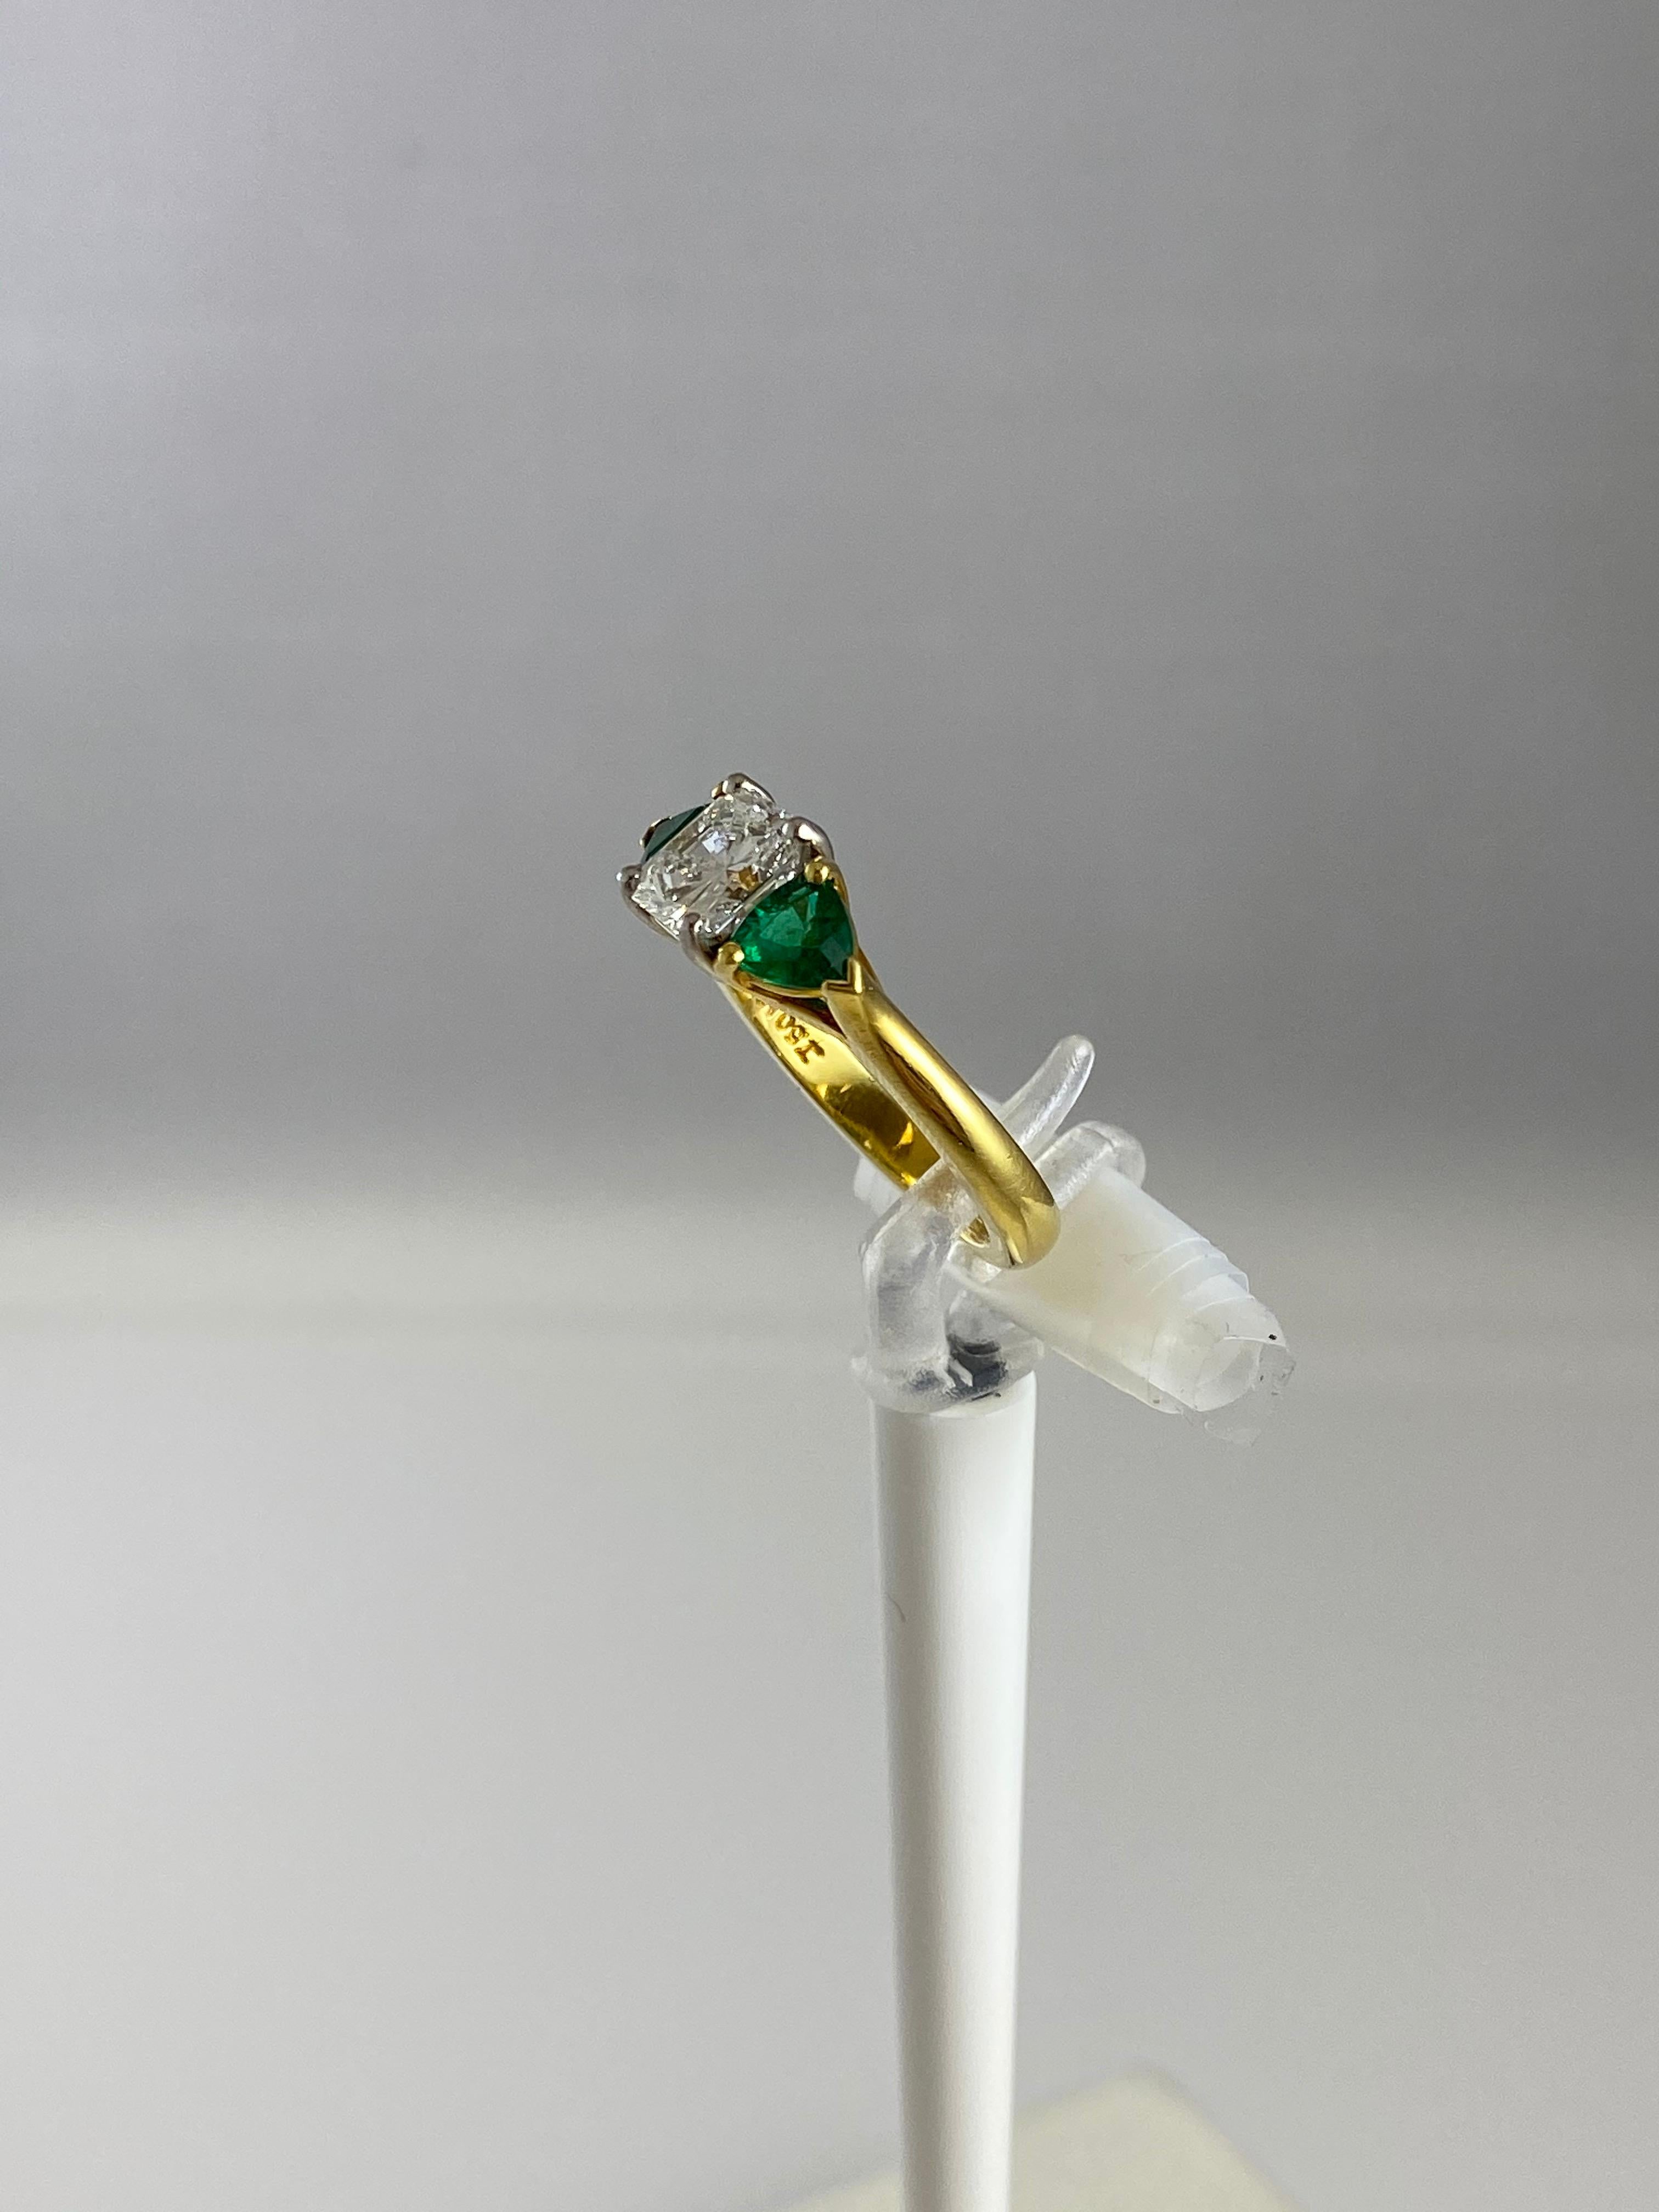 Hammerman Jewels 18k Yellow Gold & Platinum Diamond and Emerald Ring. 1.12 carat radiant diamond, and 0.67 carats of emeralds. Size 5 3/4.